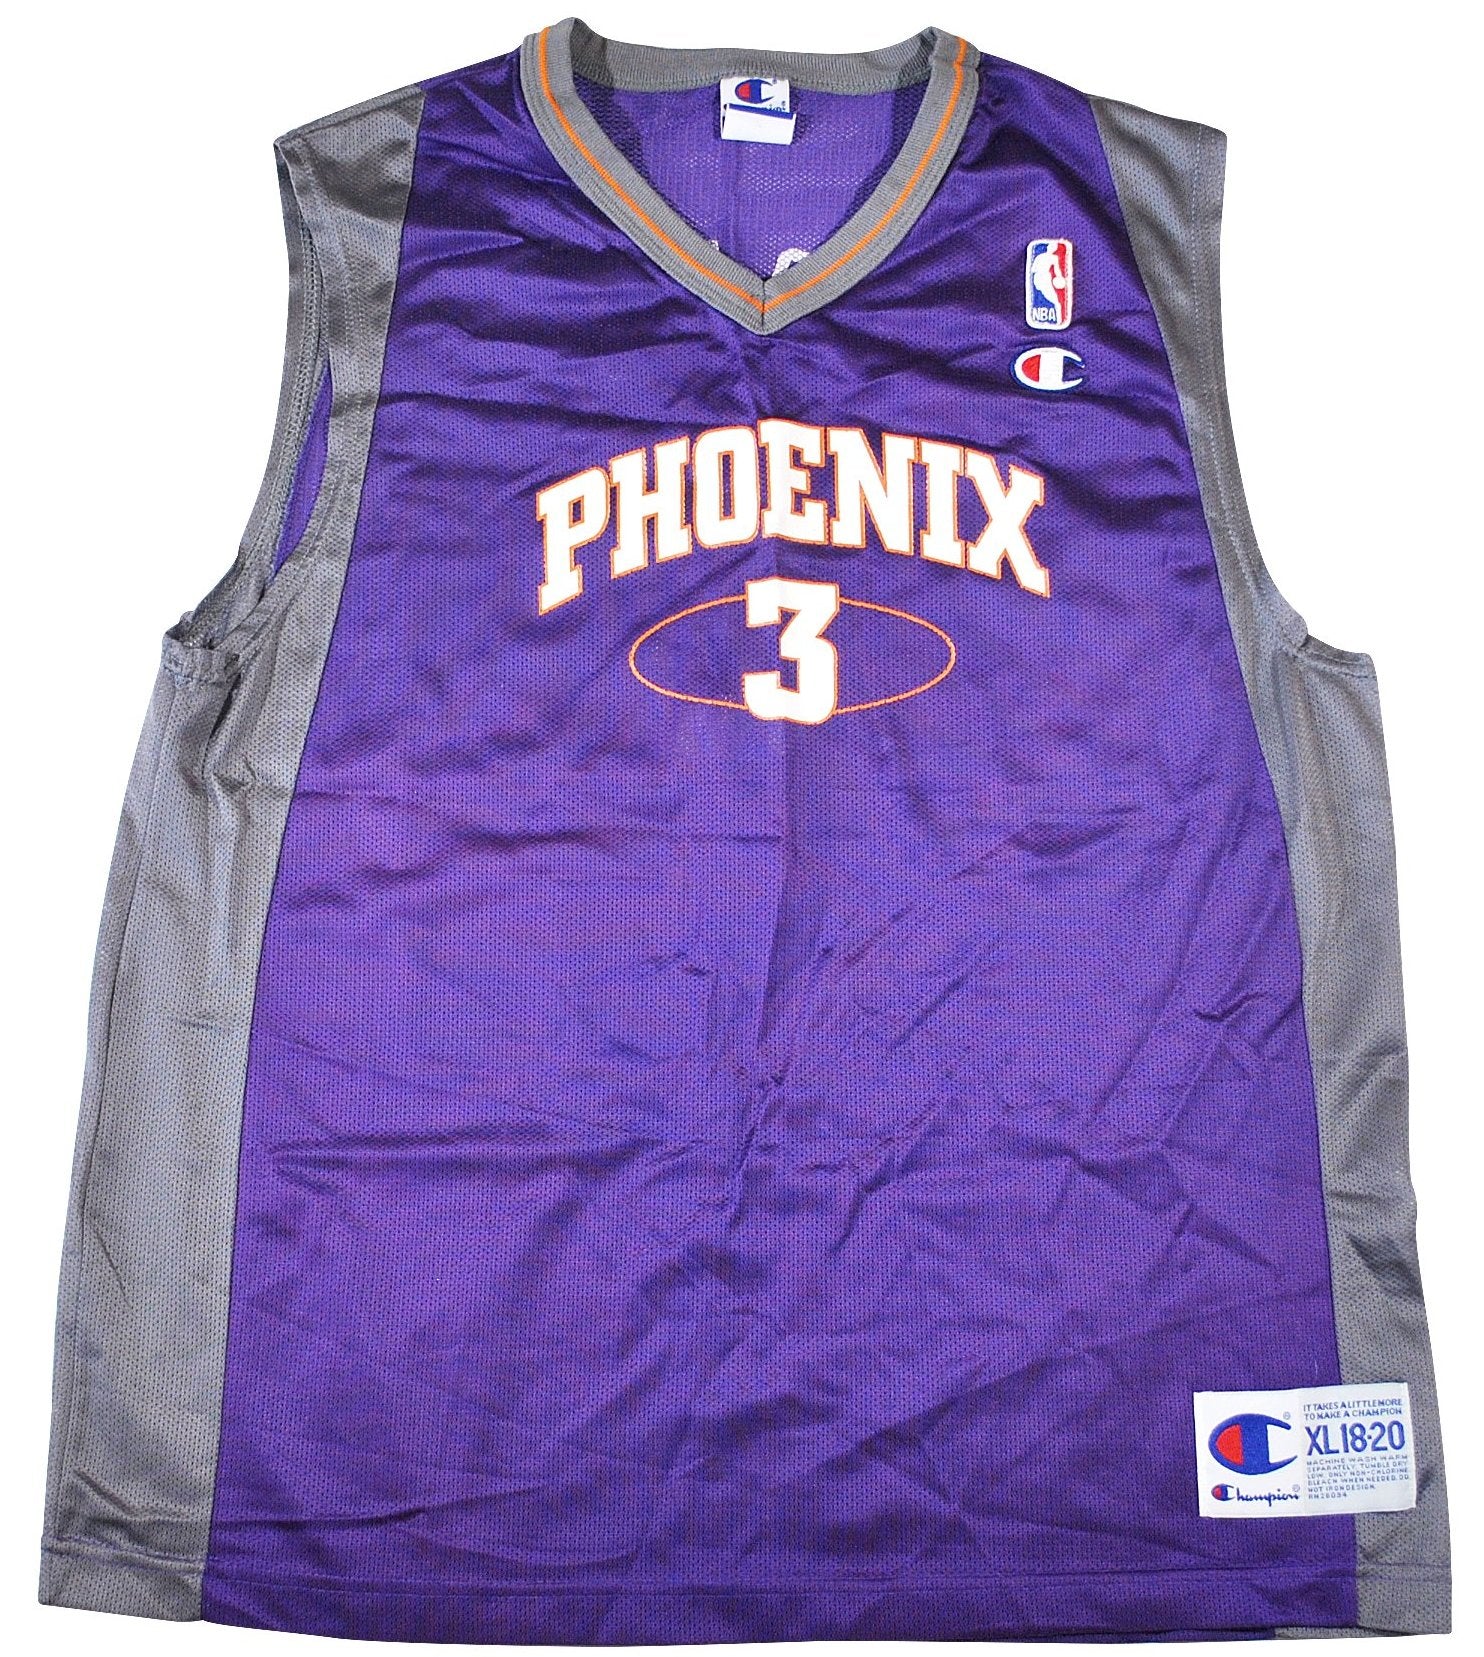 Nike, Shirts, Vintage Stephon Marbury Phoenix Suns Jersey